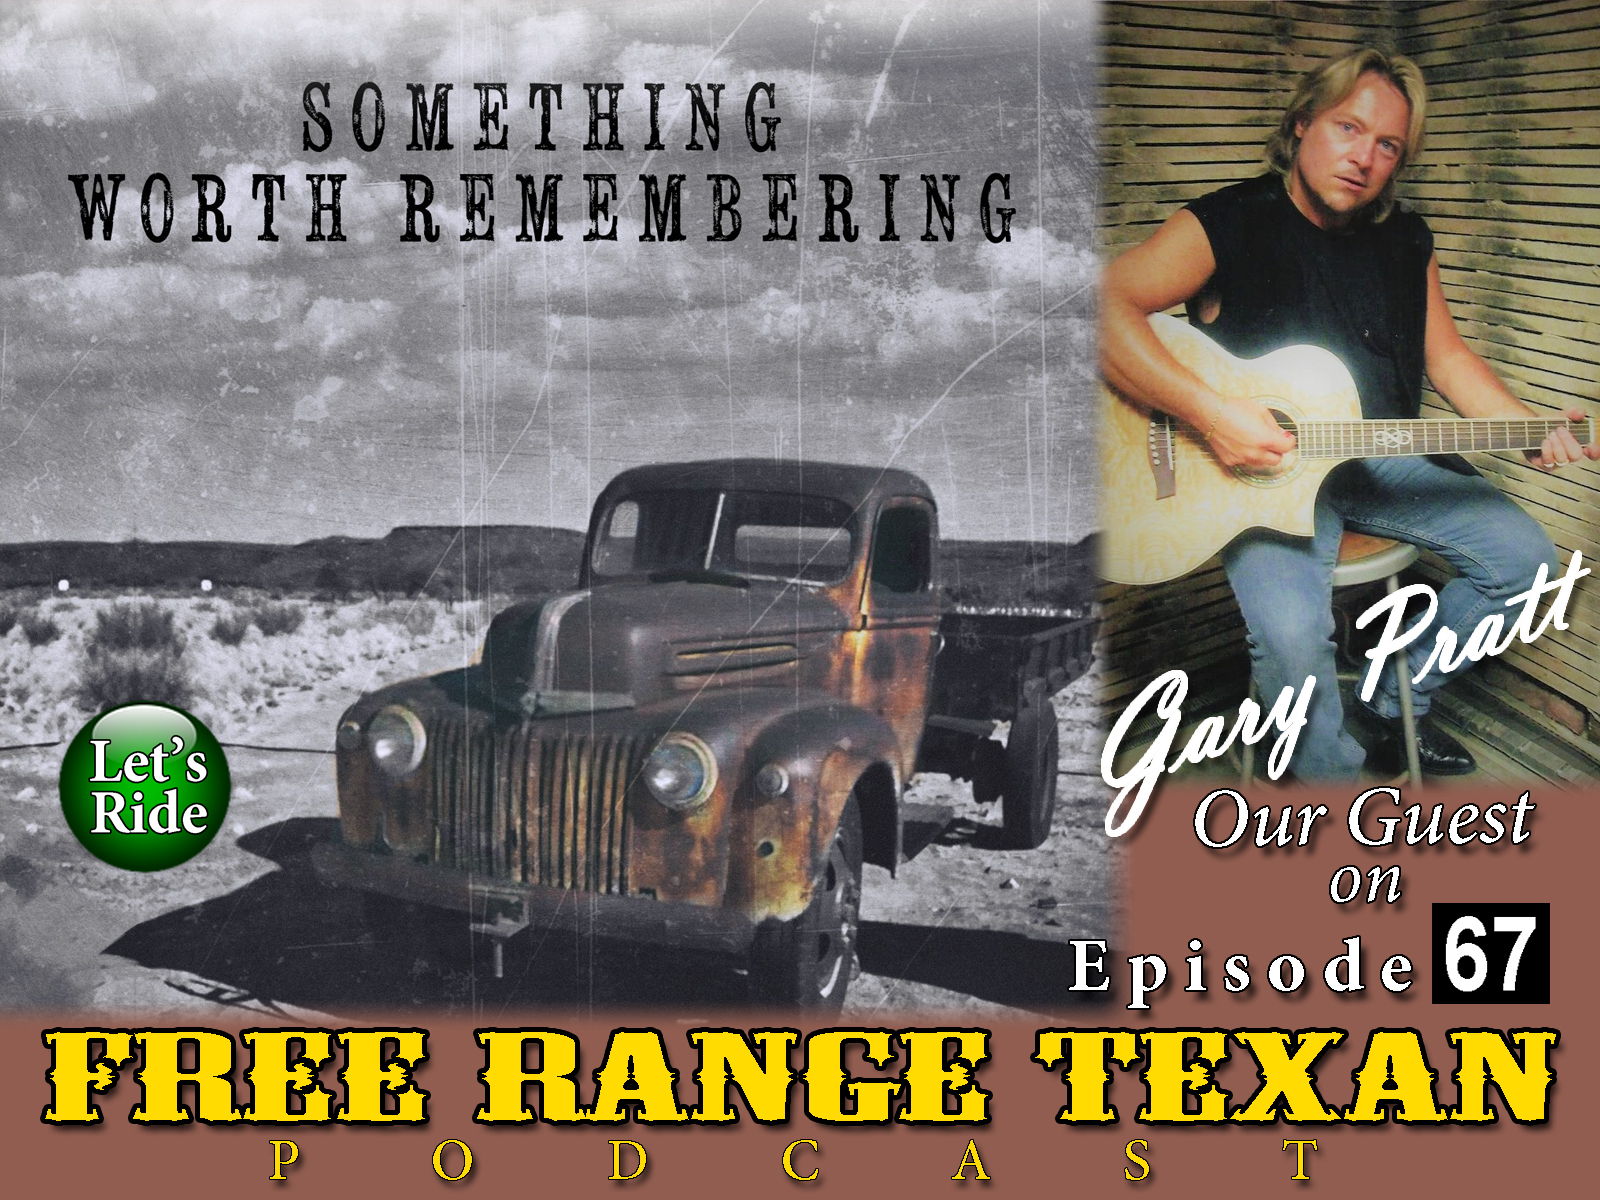 Free Range Texan Podcast Episode 67